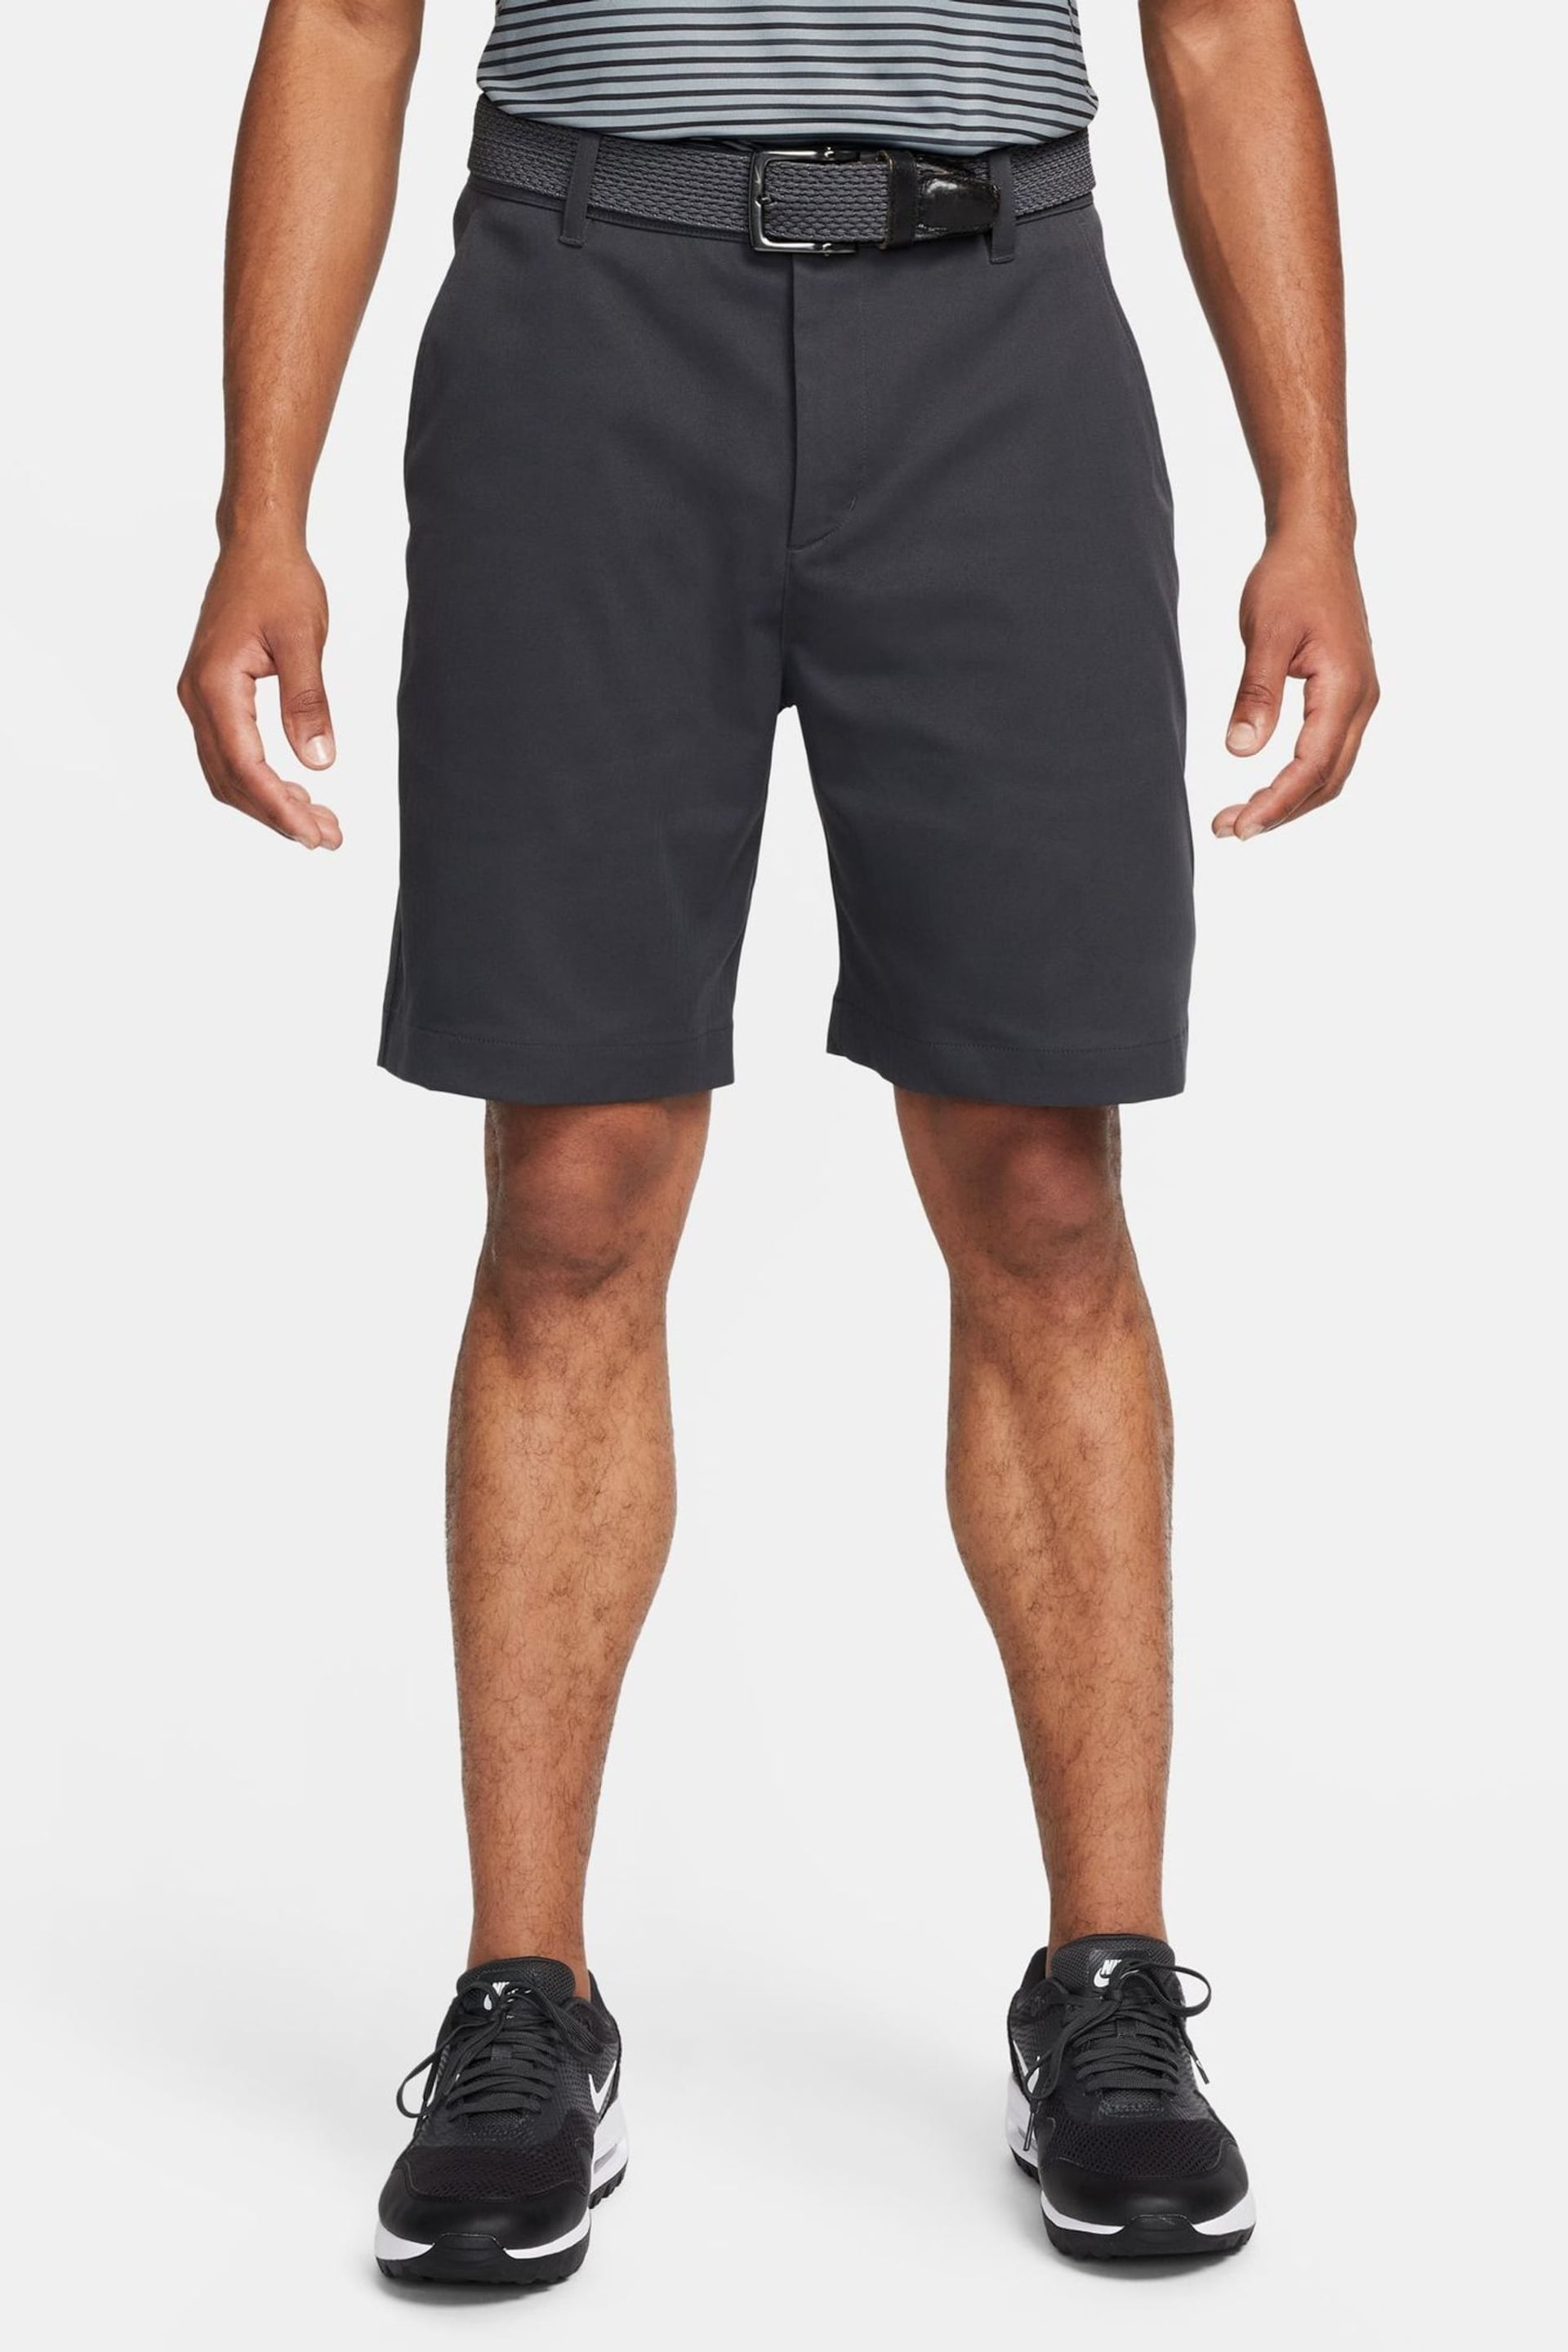 Nike Black Tour 8 inch Chino Golf Shorts - Image 1 of 7